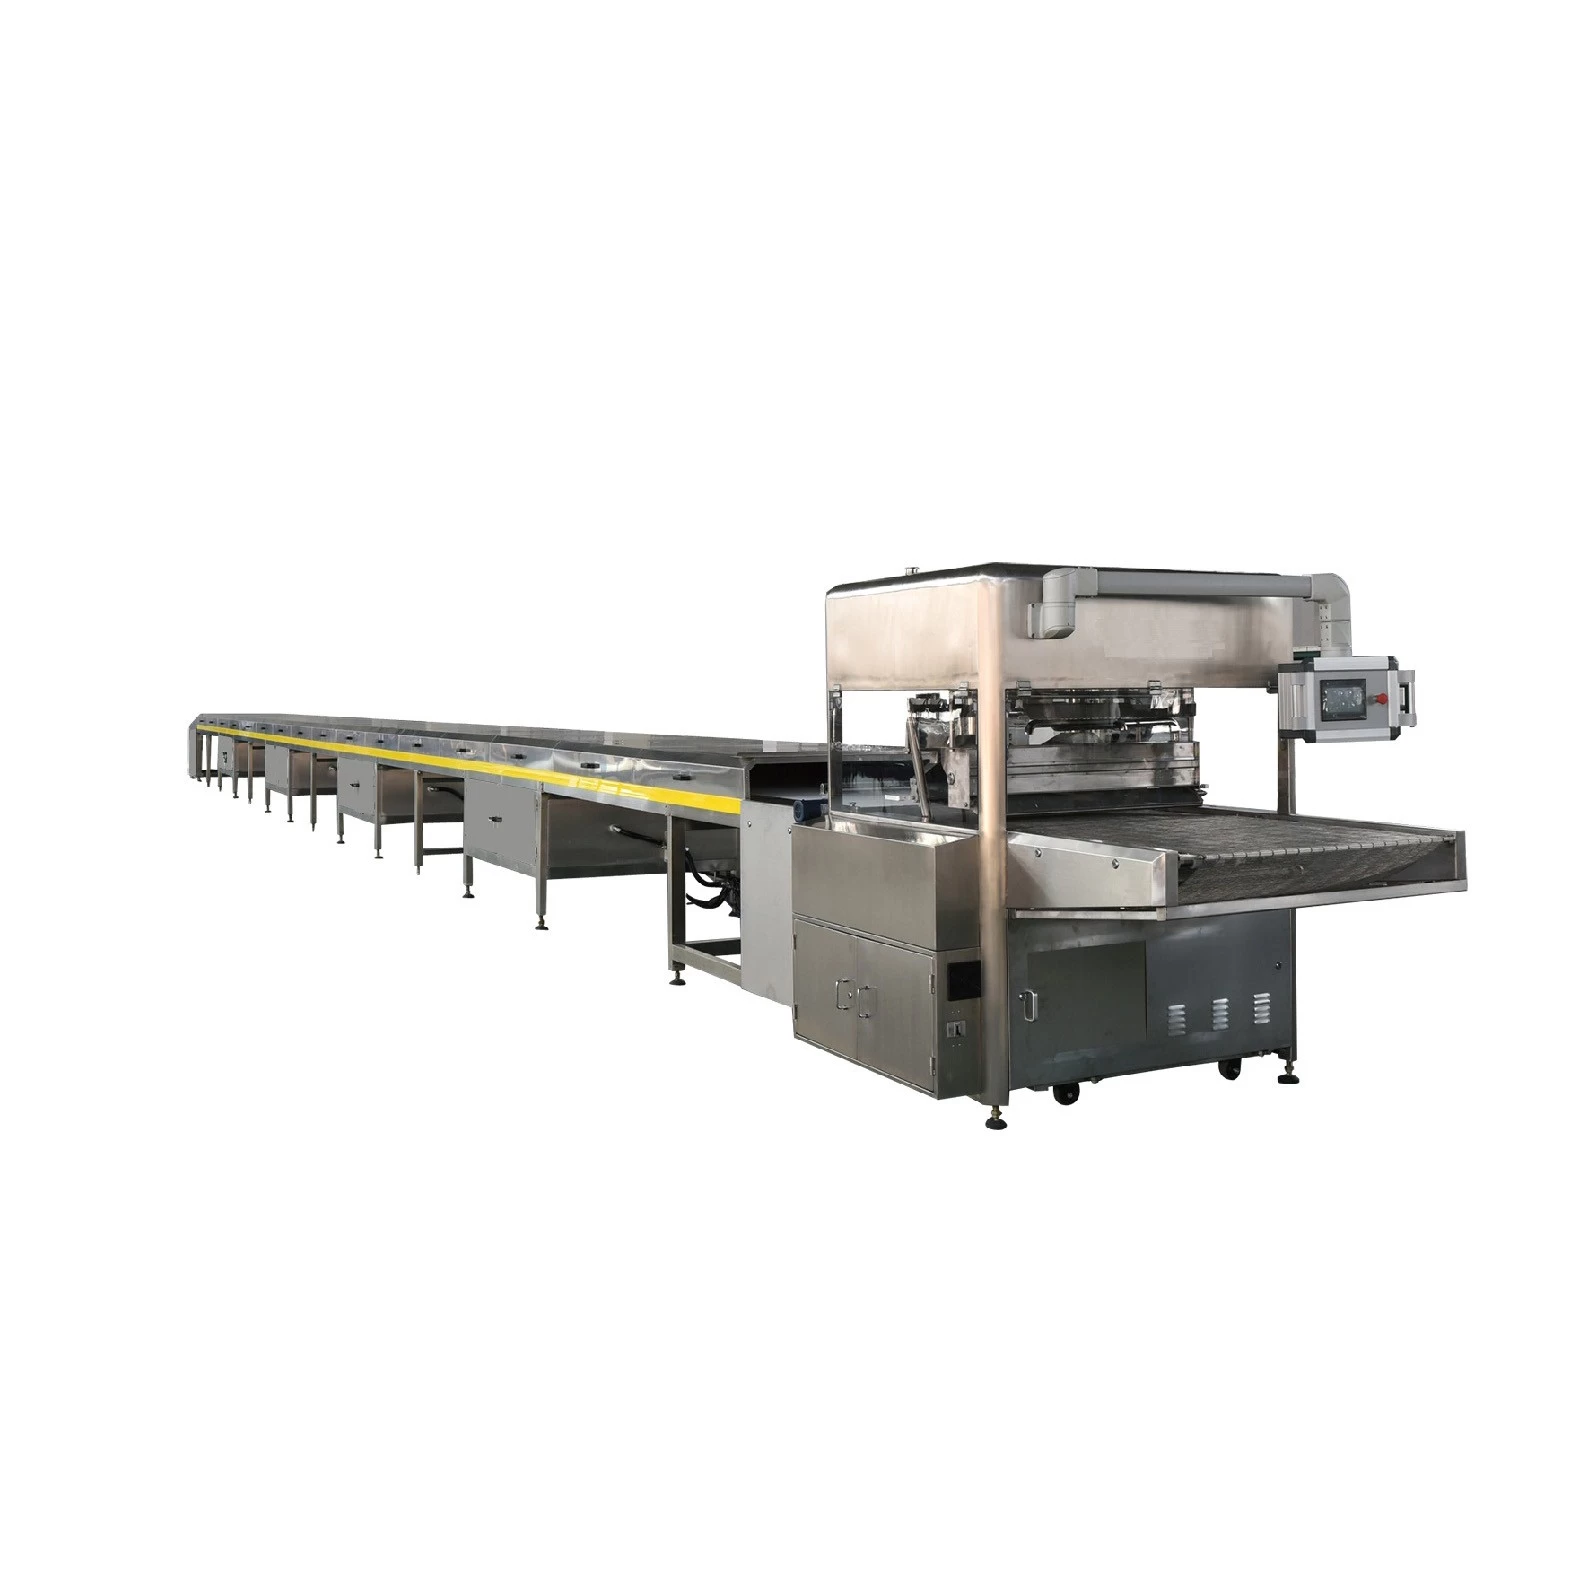 الصين Automatic candy bar production line with chocolate enrober machine drizzler cooling tunnel equipment الصانع